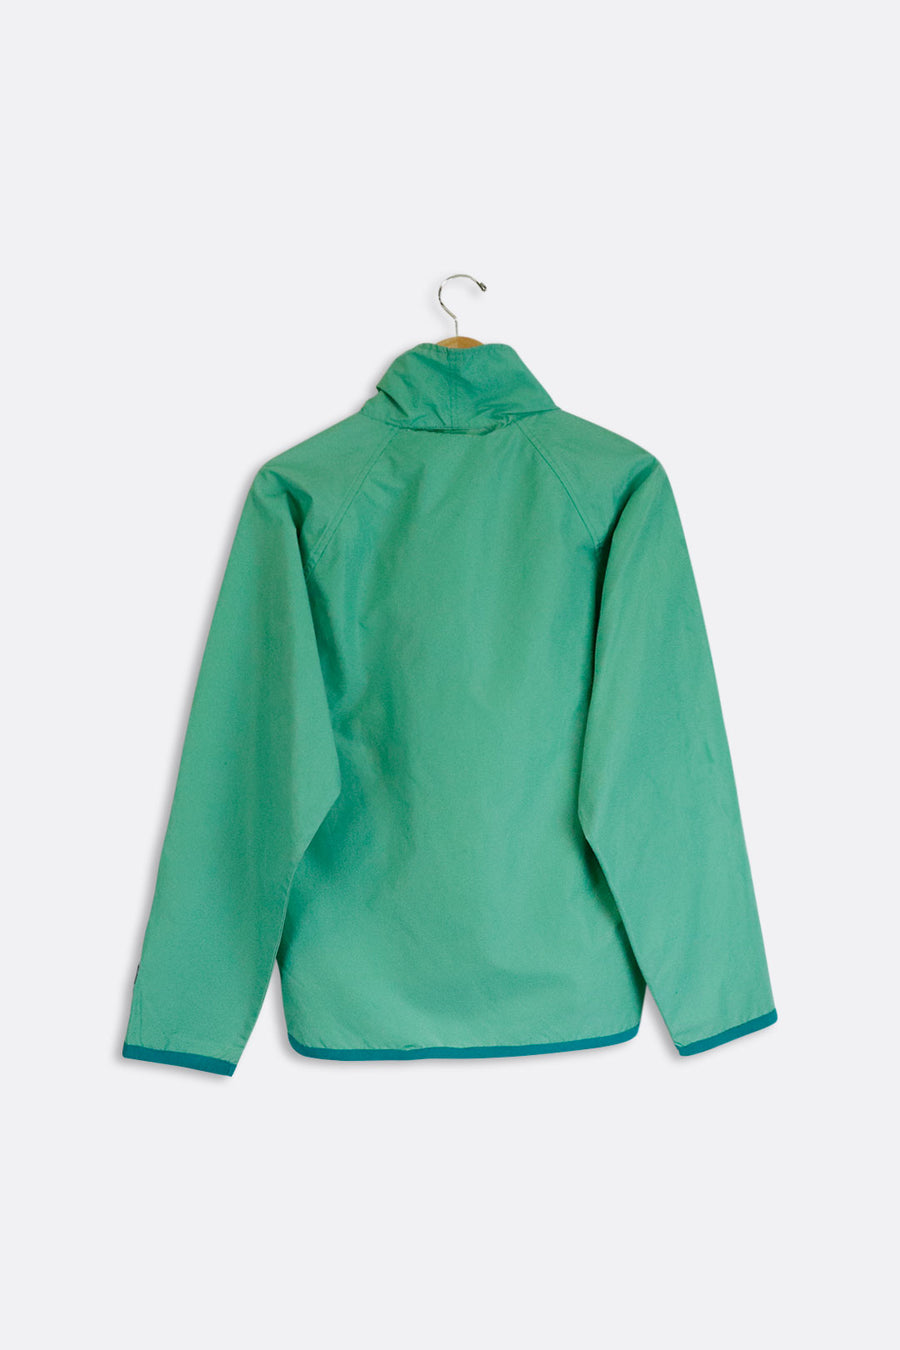 Vintage Sierra Designs Green Quarter Zip Windbreaker Jacket Sz S